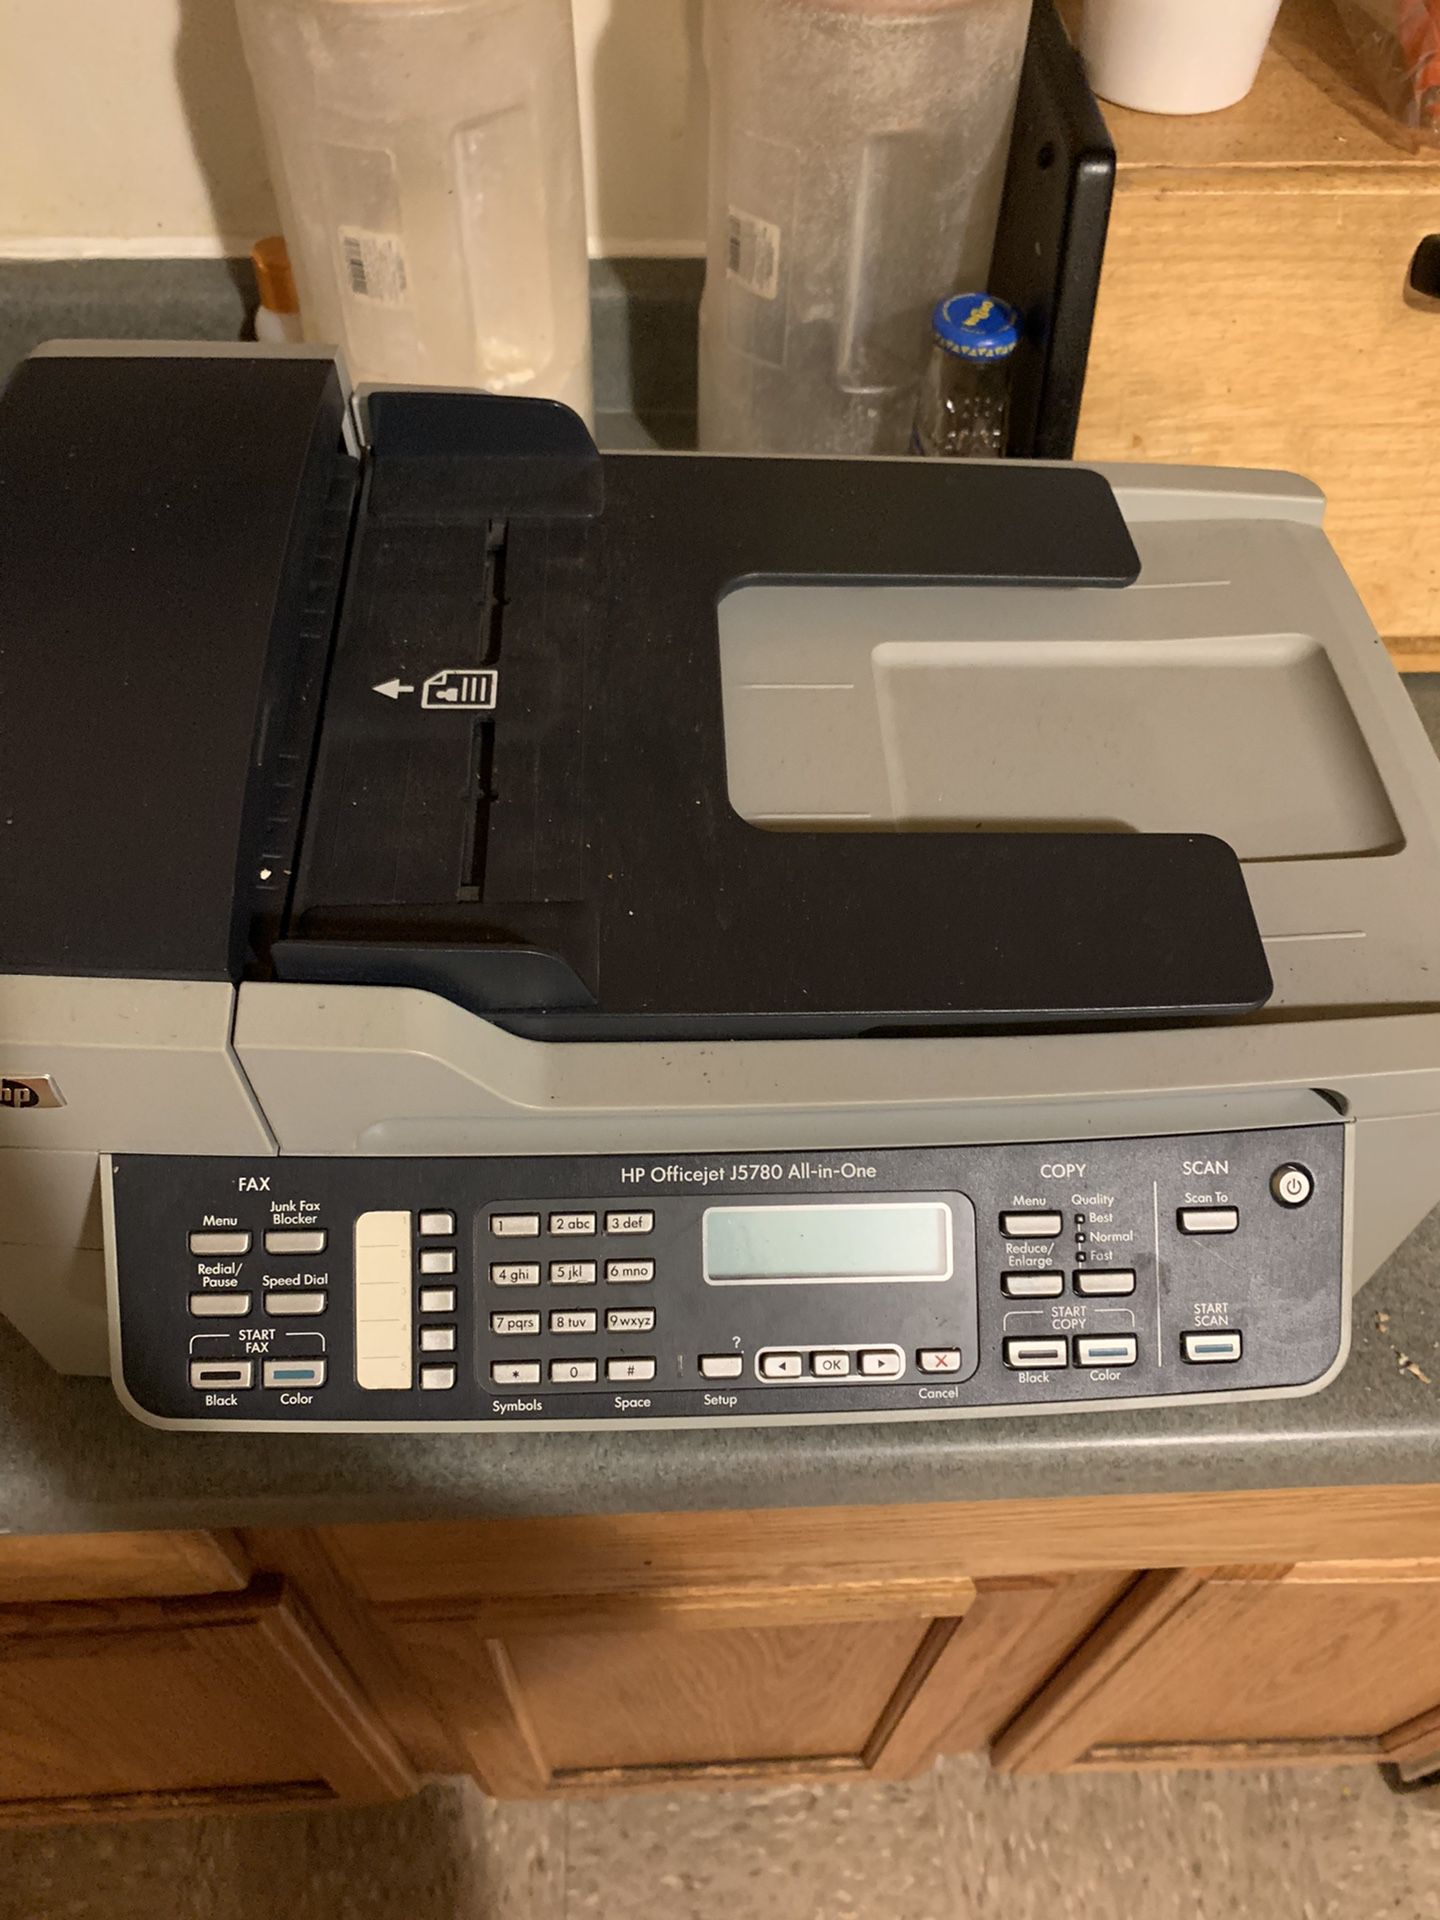 Fax machine copier and scanner